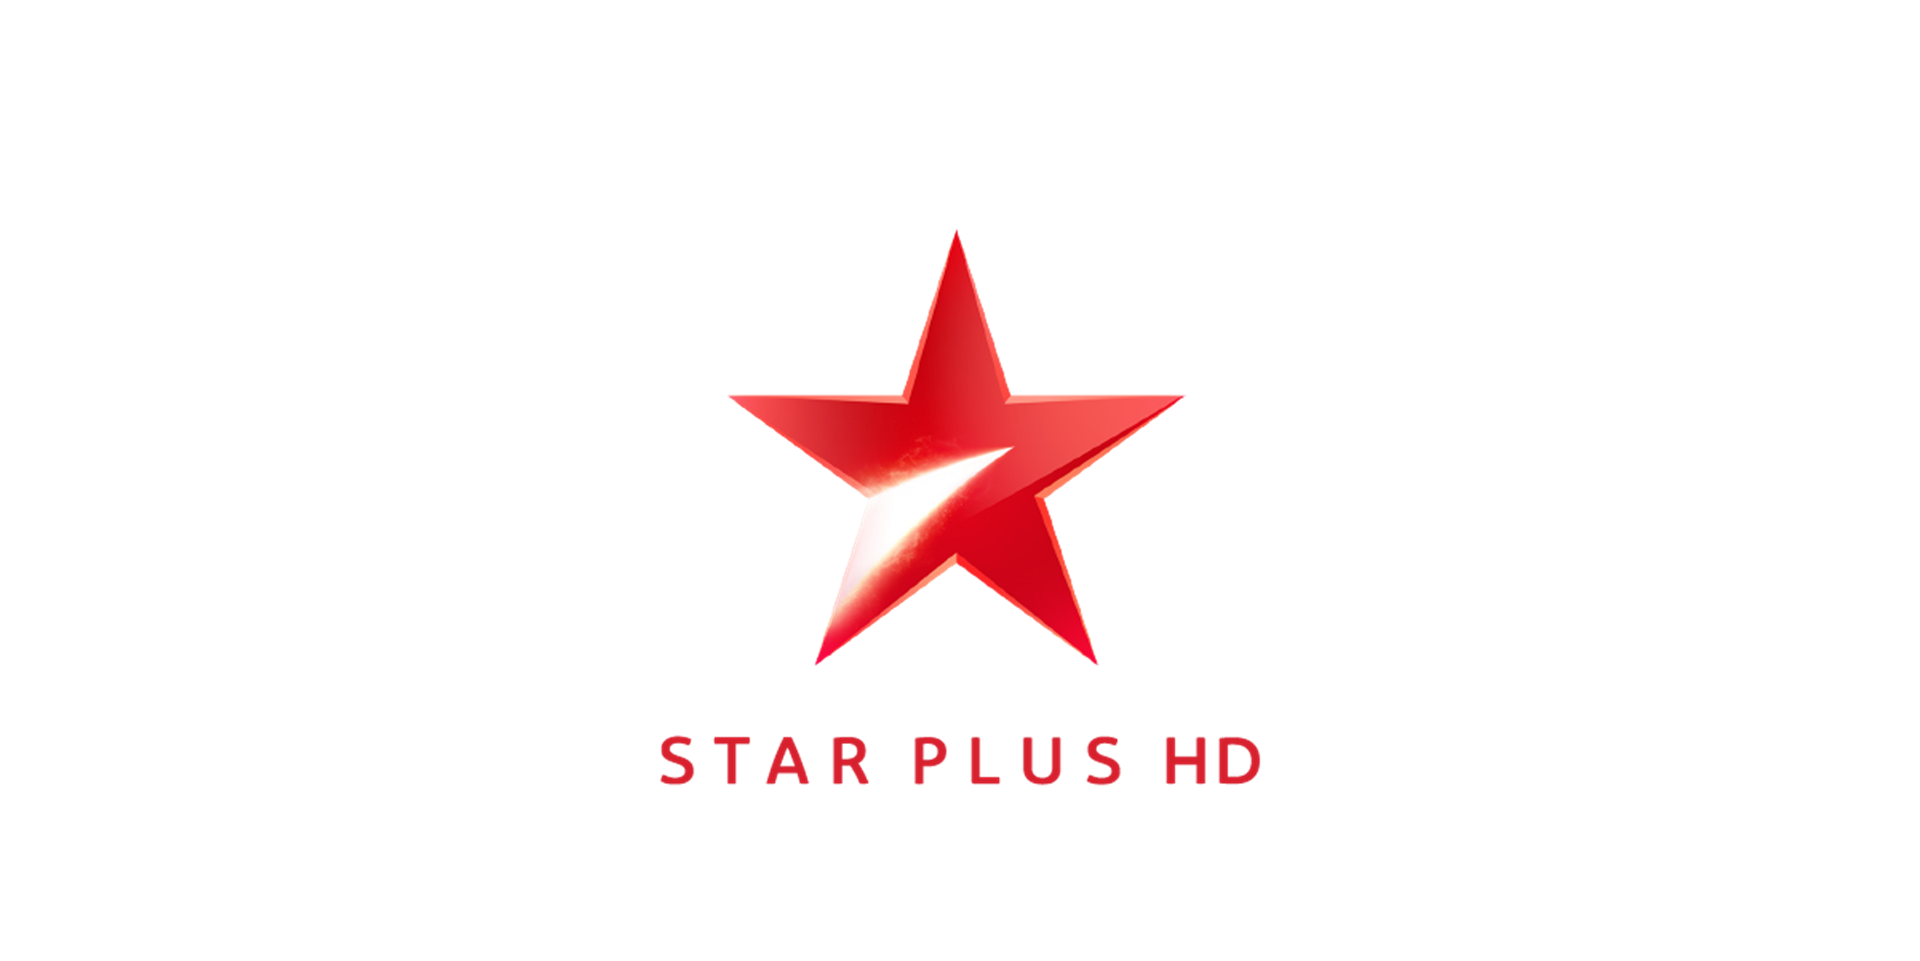 star_plus_hd_logo_white_bg.png